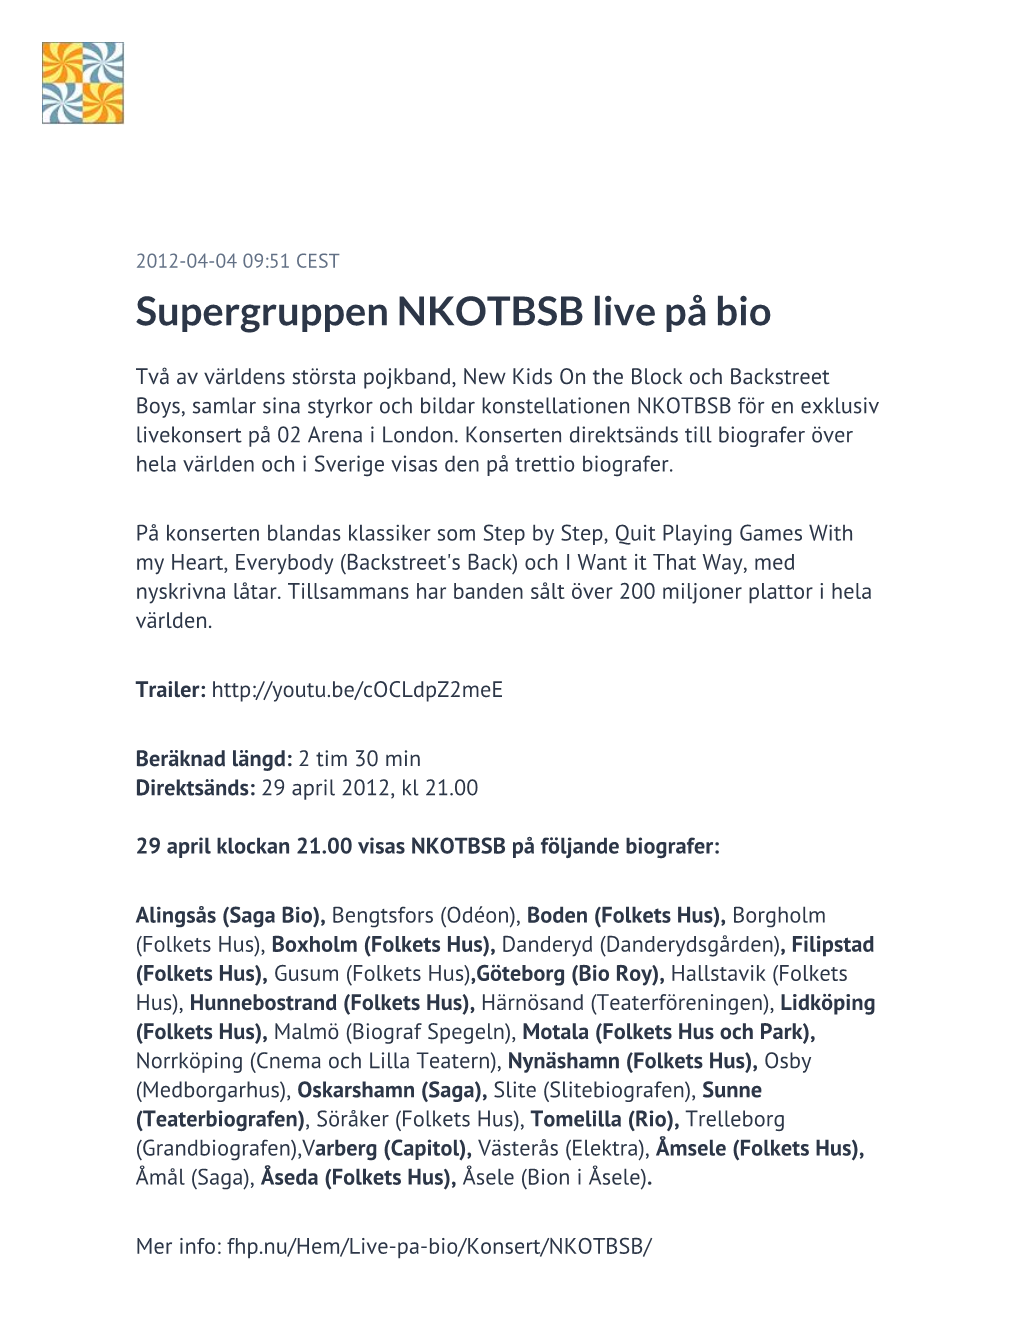 Supergruppen NKOTBSB Live På Bio